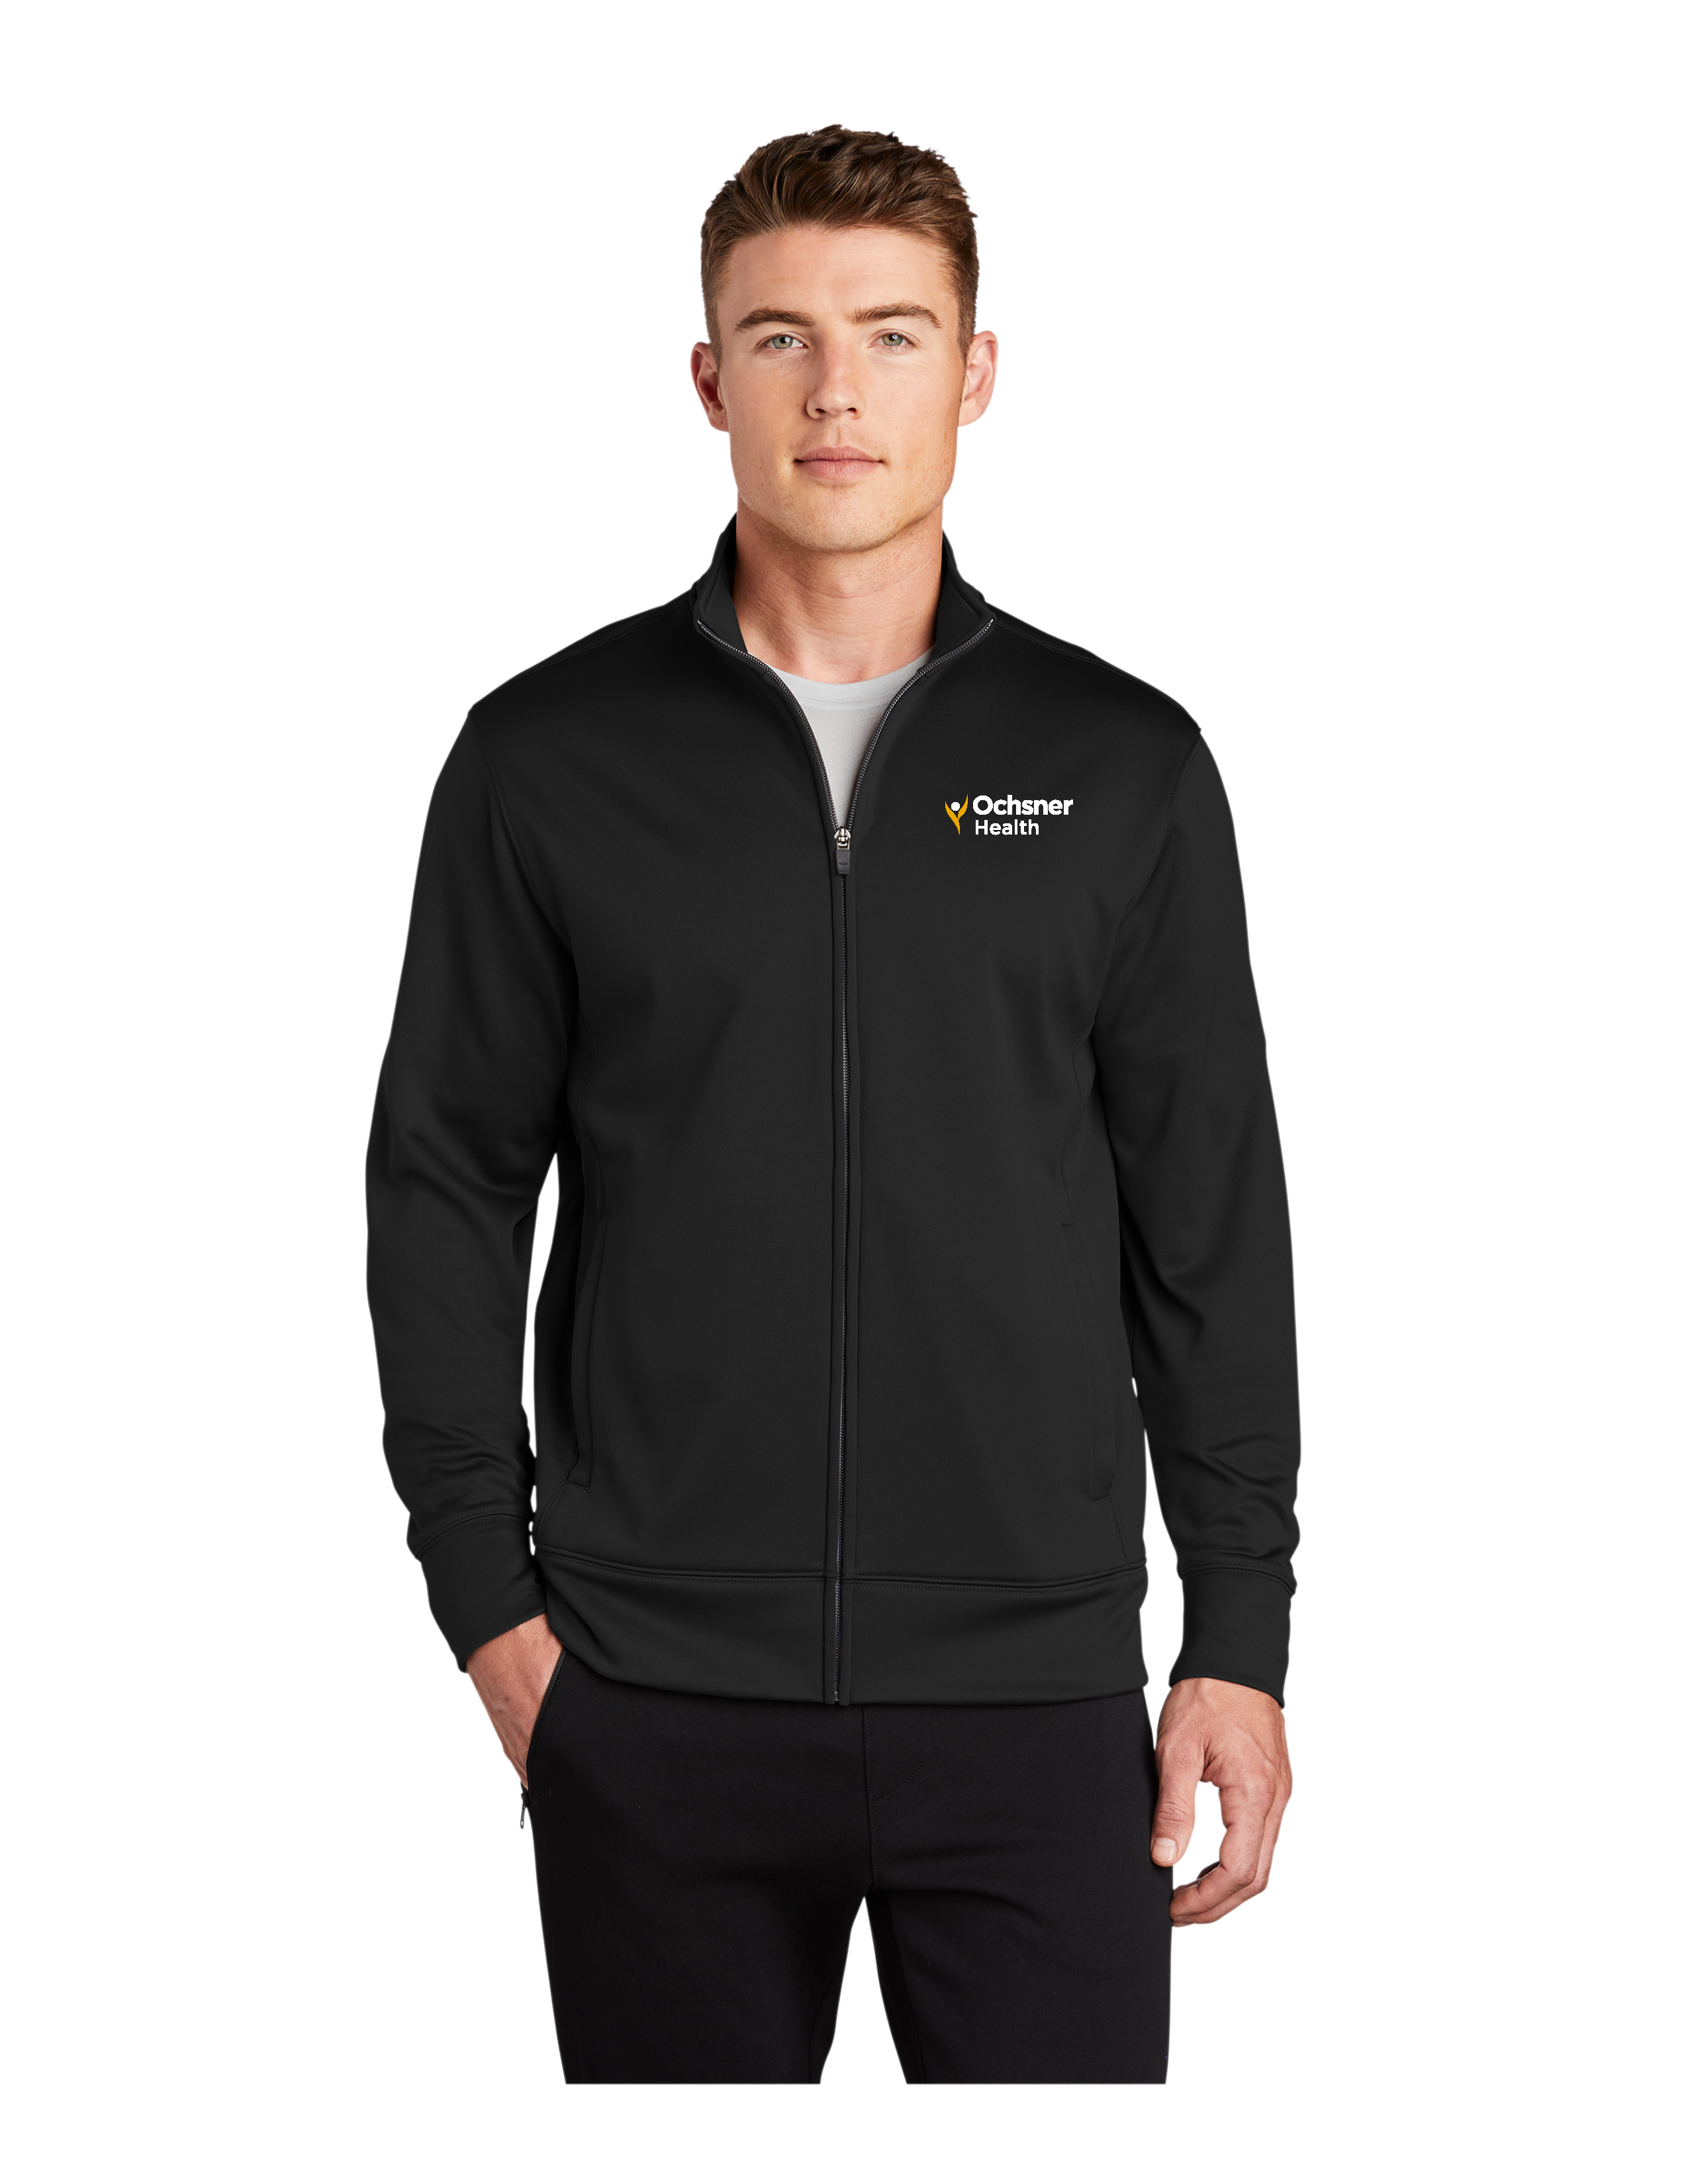 Men's Sportwick Fleece Jacket, , large image number 1